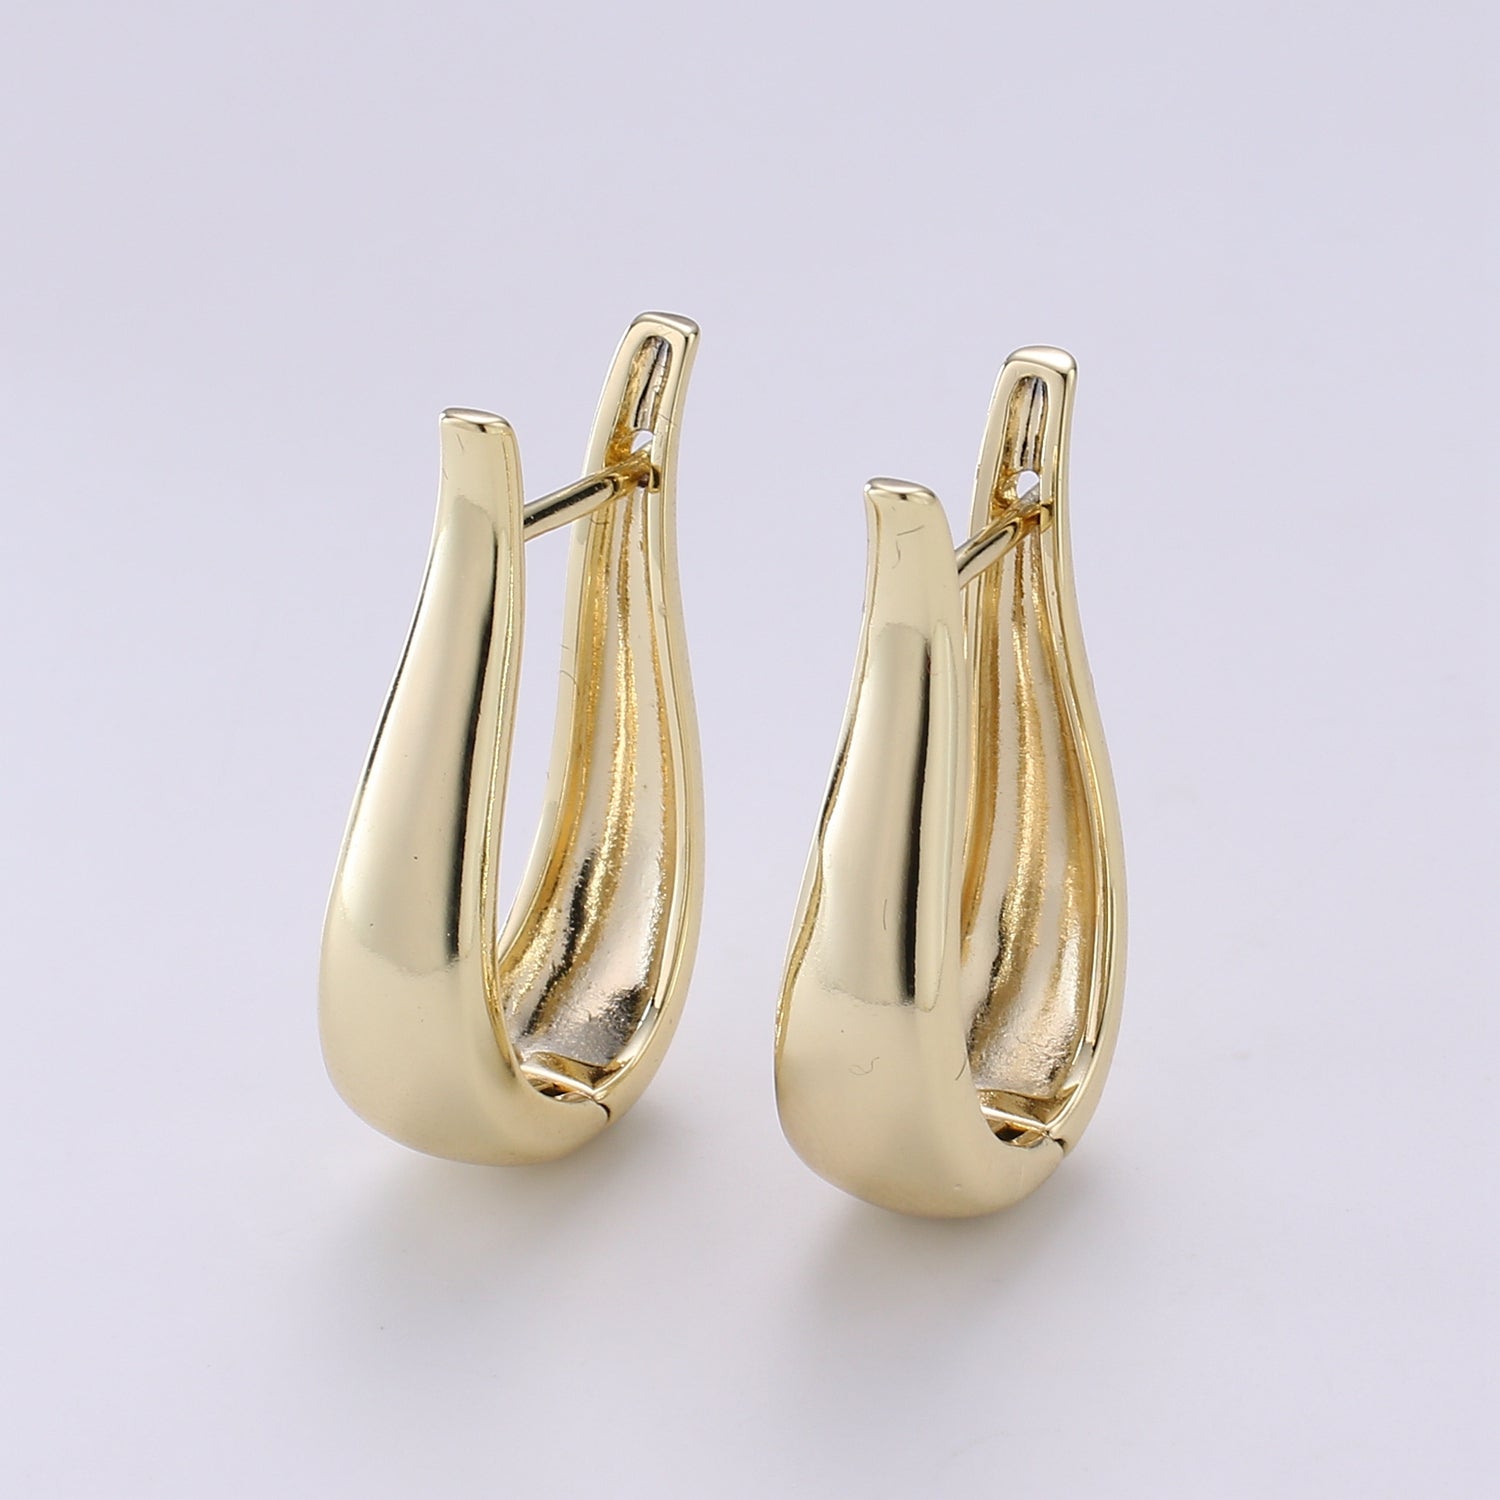 1 pair Gold Huggie Earring Chunky Earring 30mm, 14K gold Filled Earromg Nickel and Lead free, Lever back earring making Supply Ear-1301 - DLUXCA